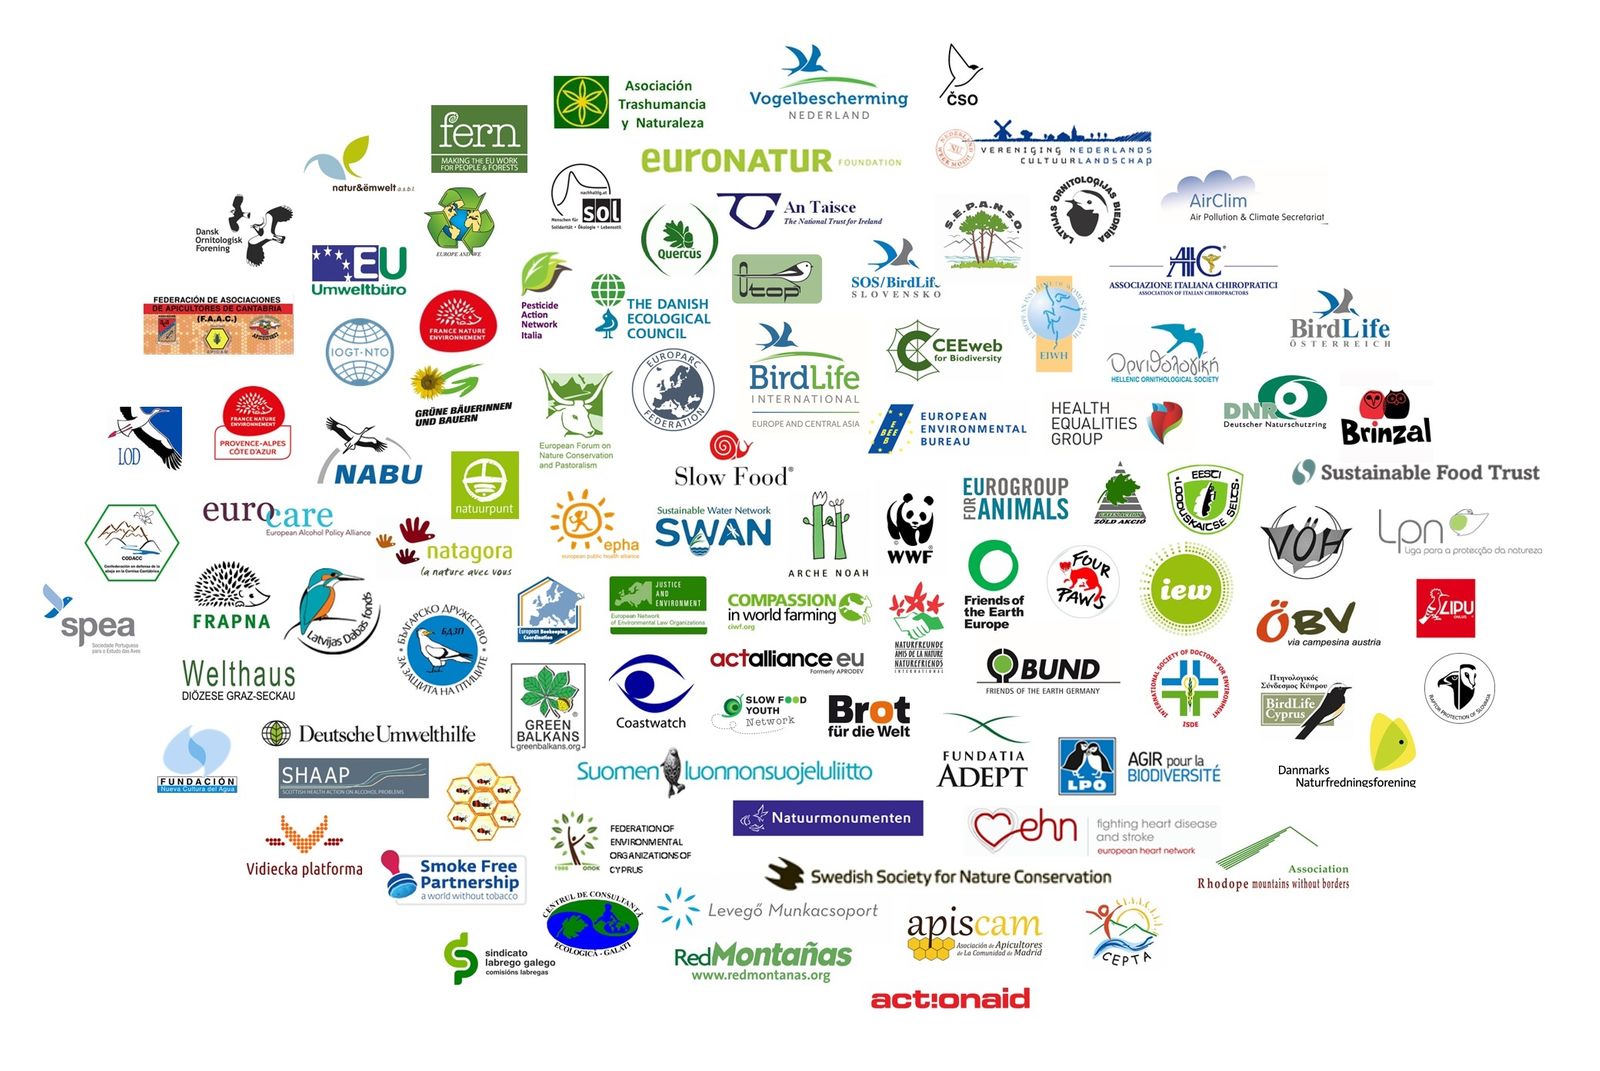 Non-governmental organisations (NGOs)